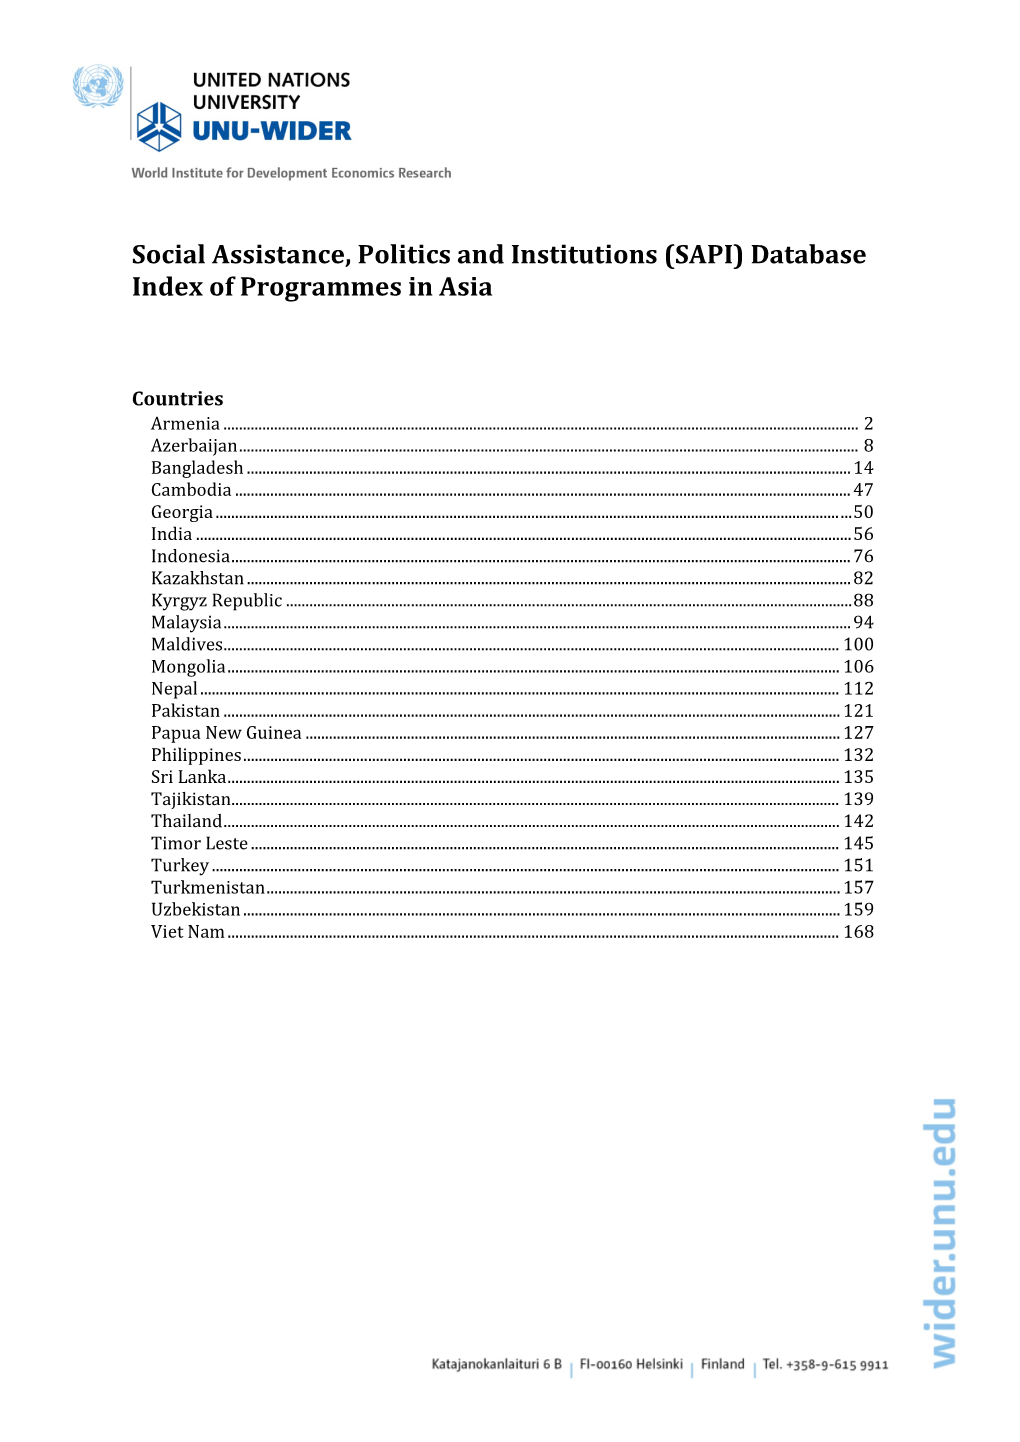 SAPI) Database Index of Programmes in Asia